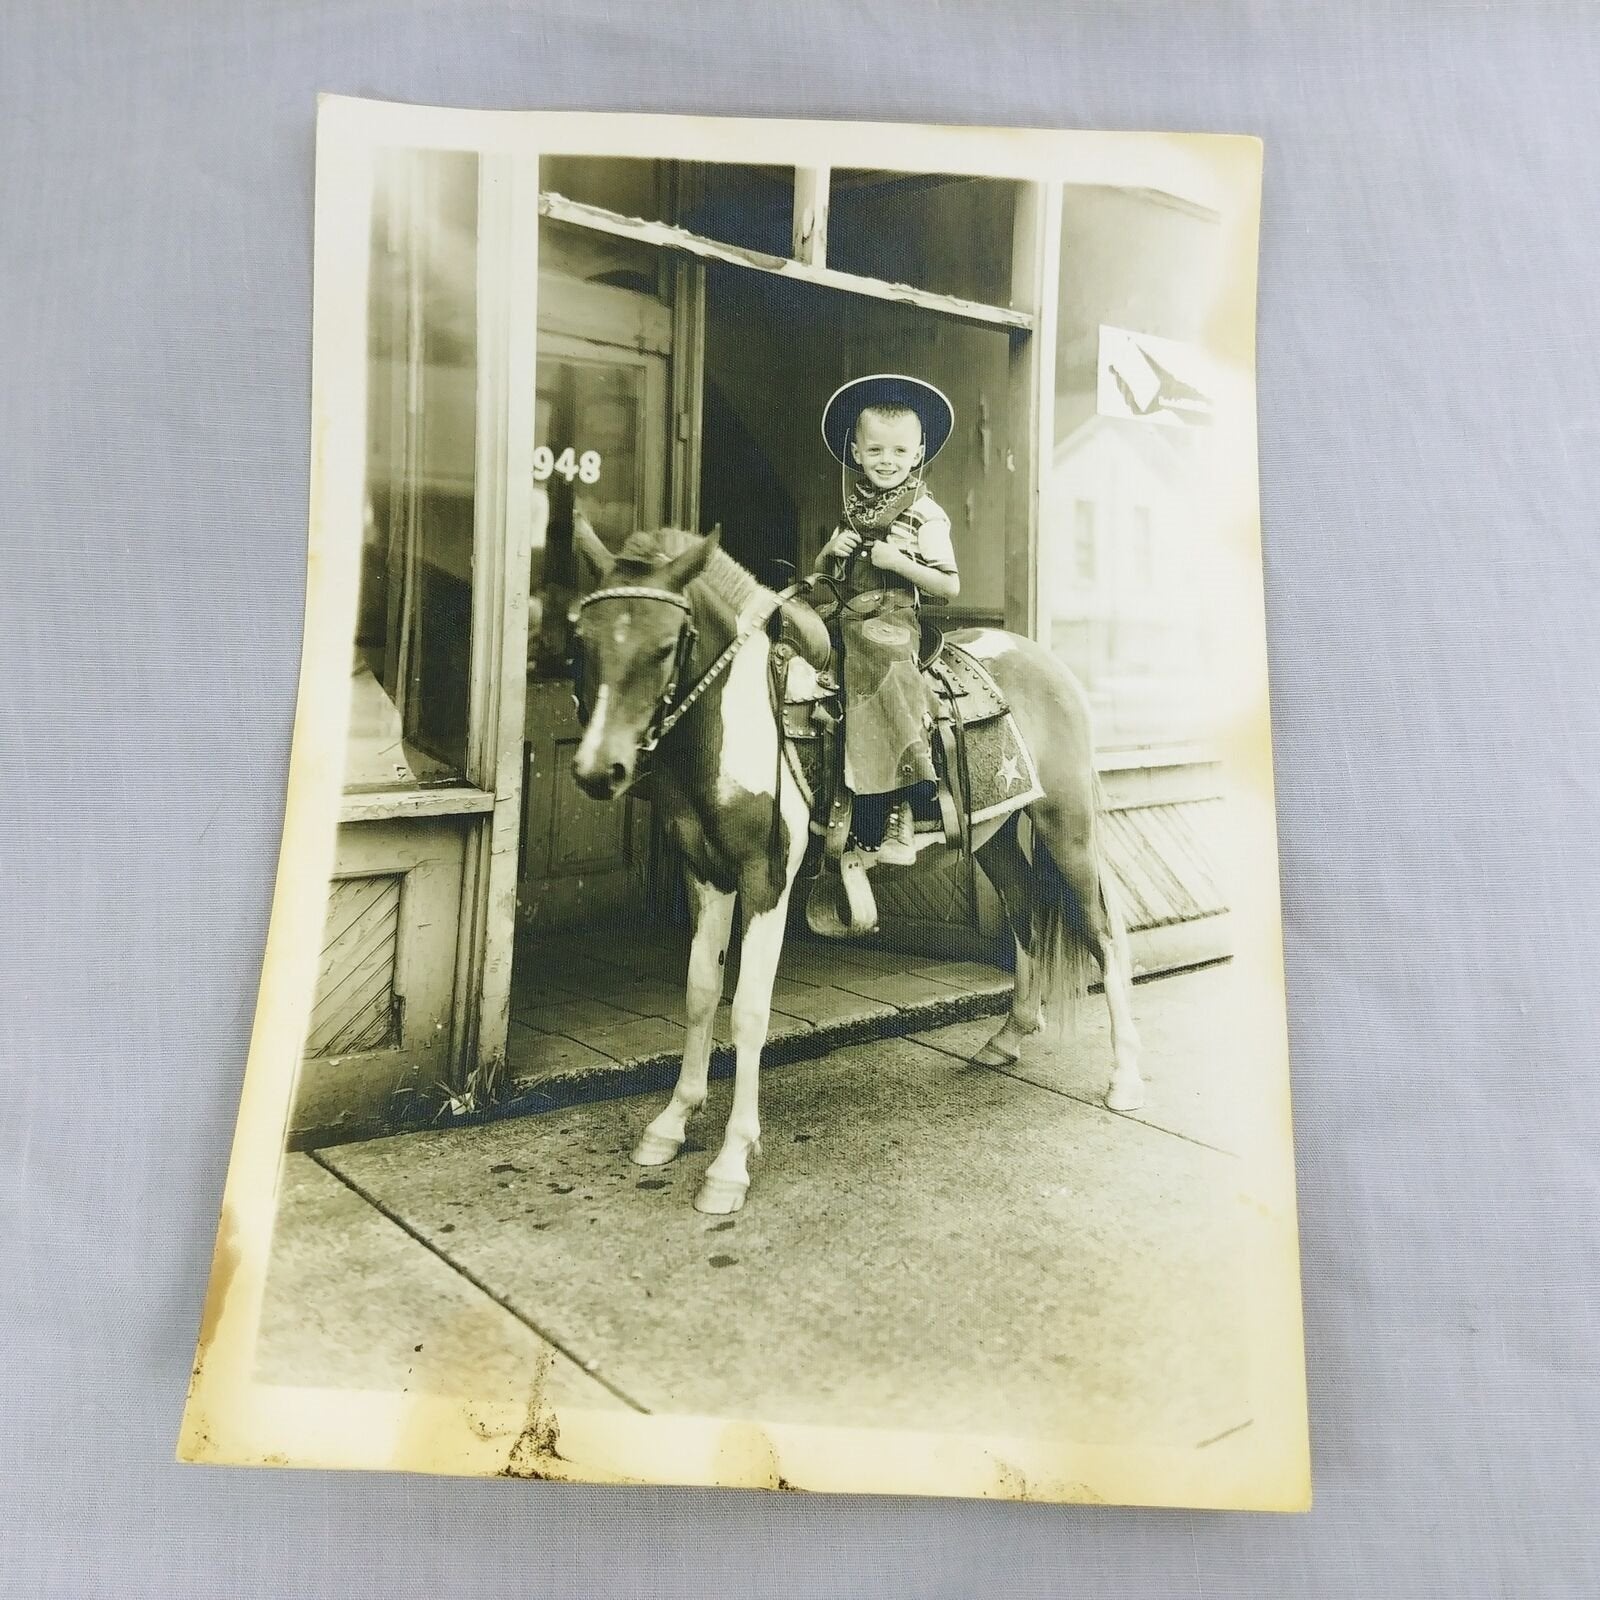 Early Twentieth Century Photos 1 Metal Mounted Masons Plaque 1 Boy on Pony 2pc